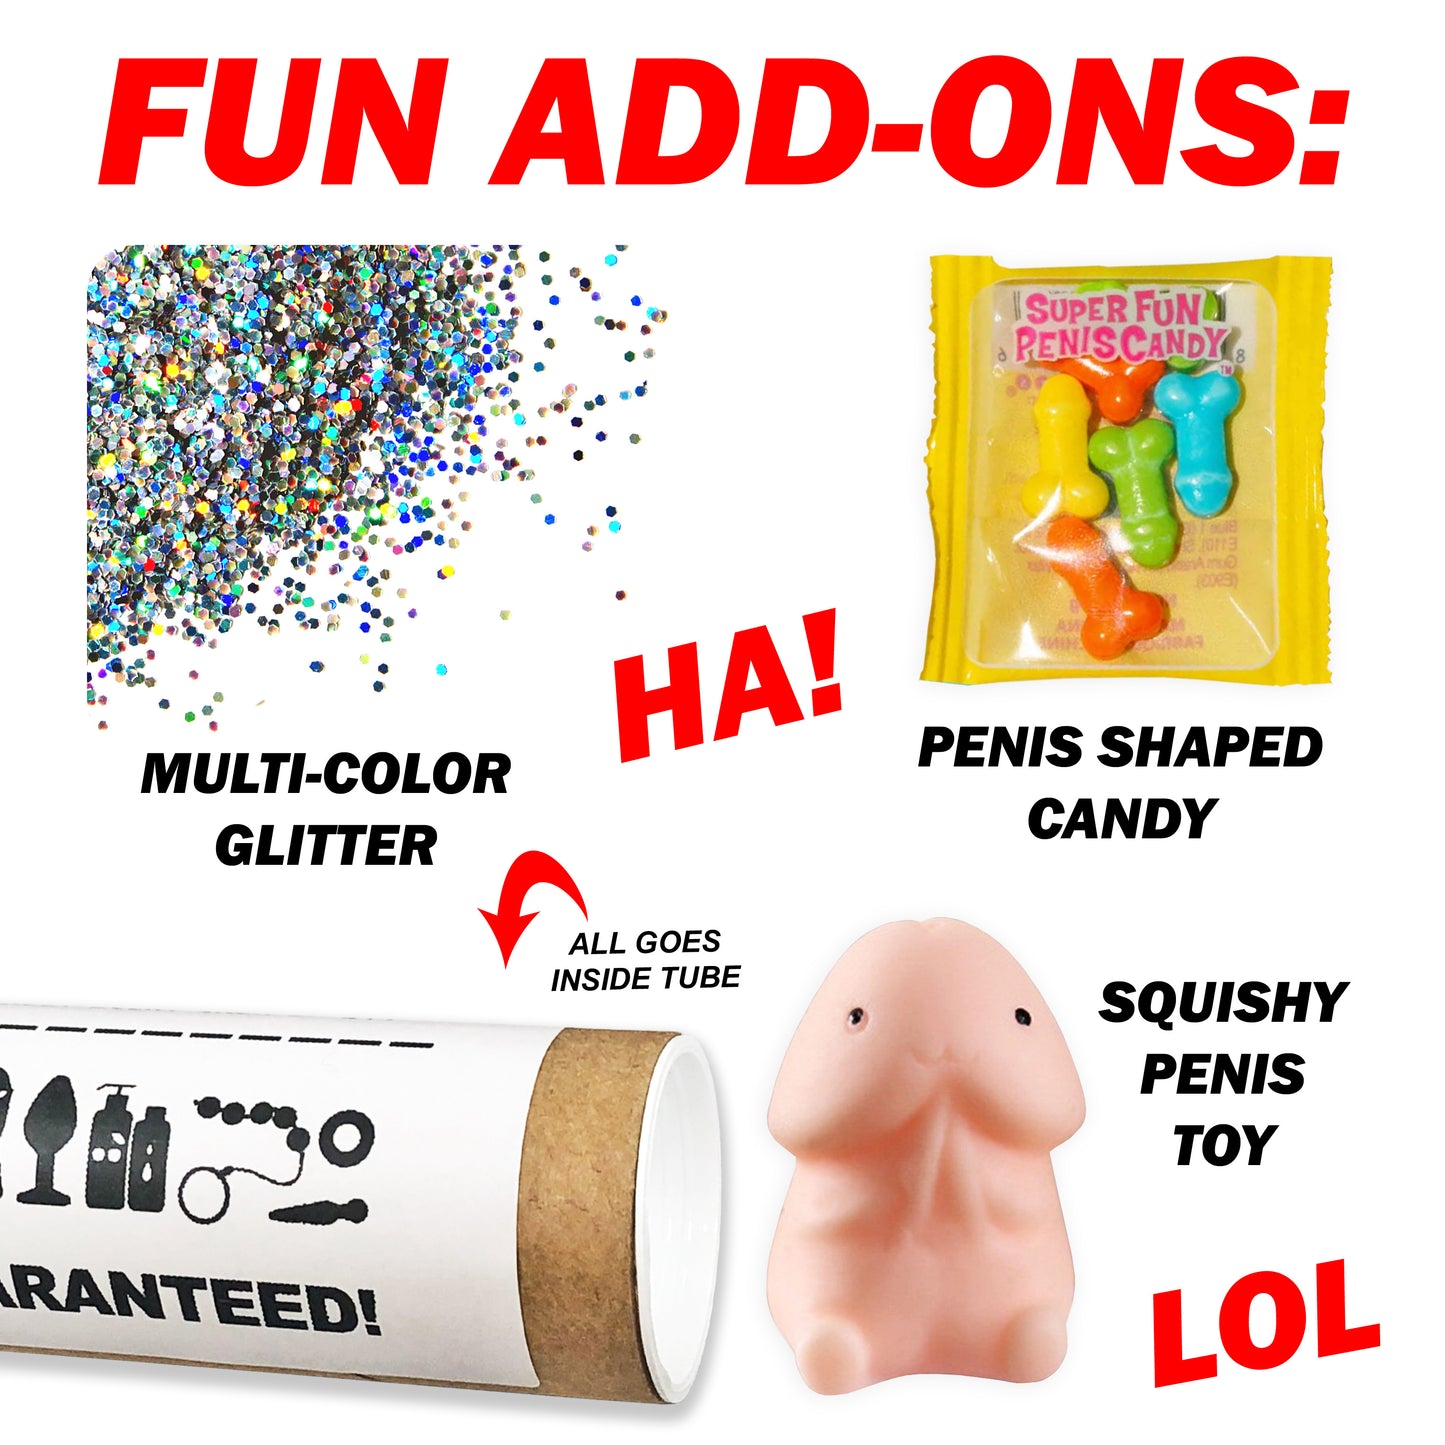 Slightly Used Sex Toys Practical Joke Add-Ons